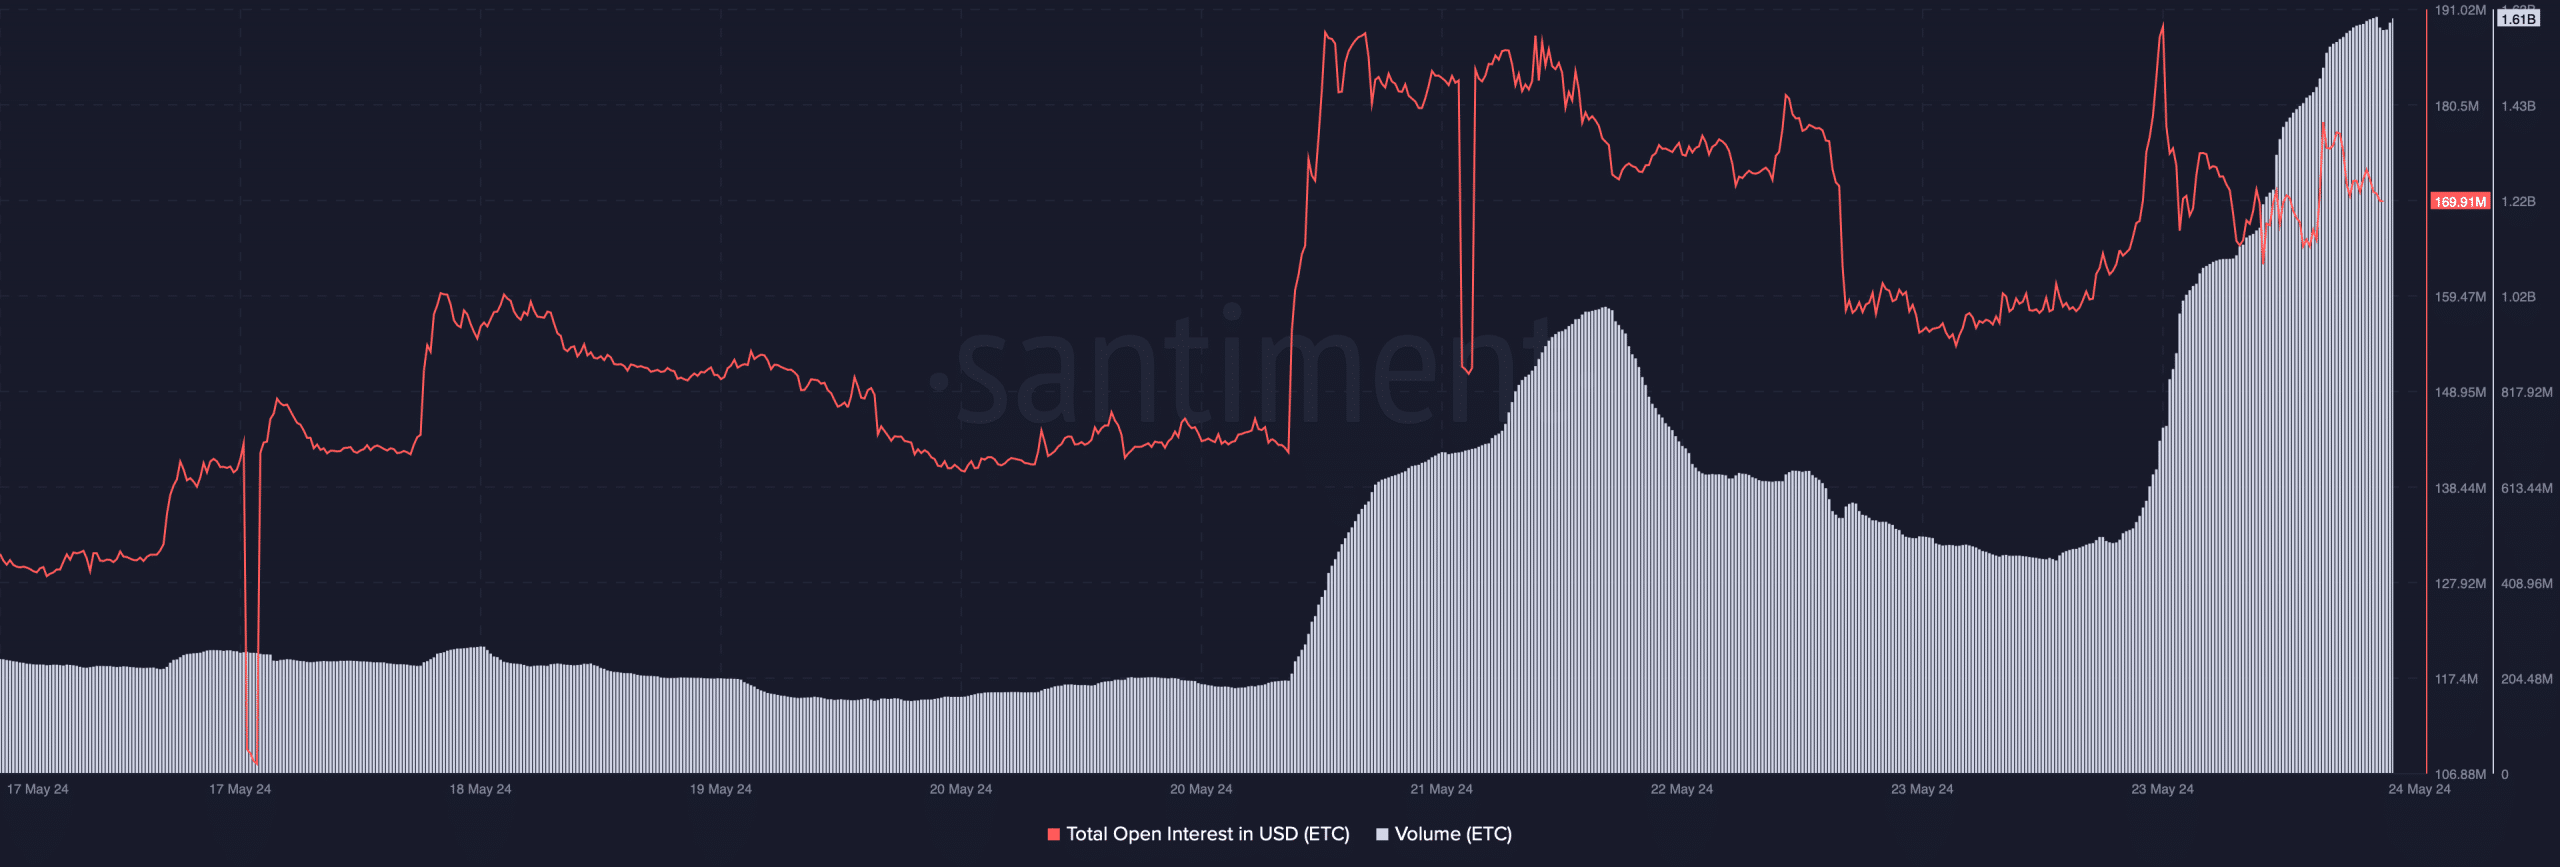 ETC's trading volume surged